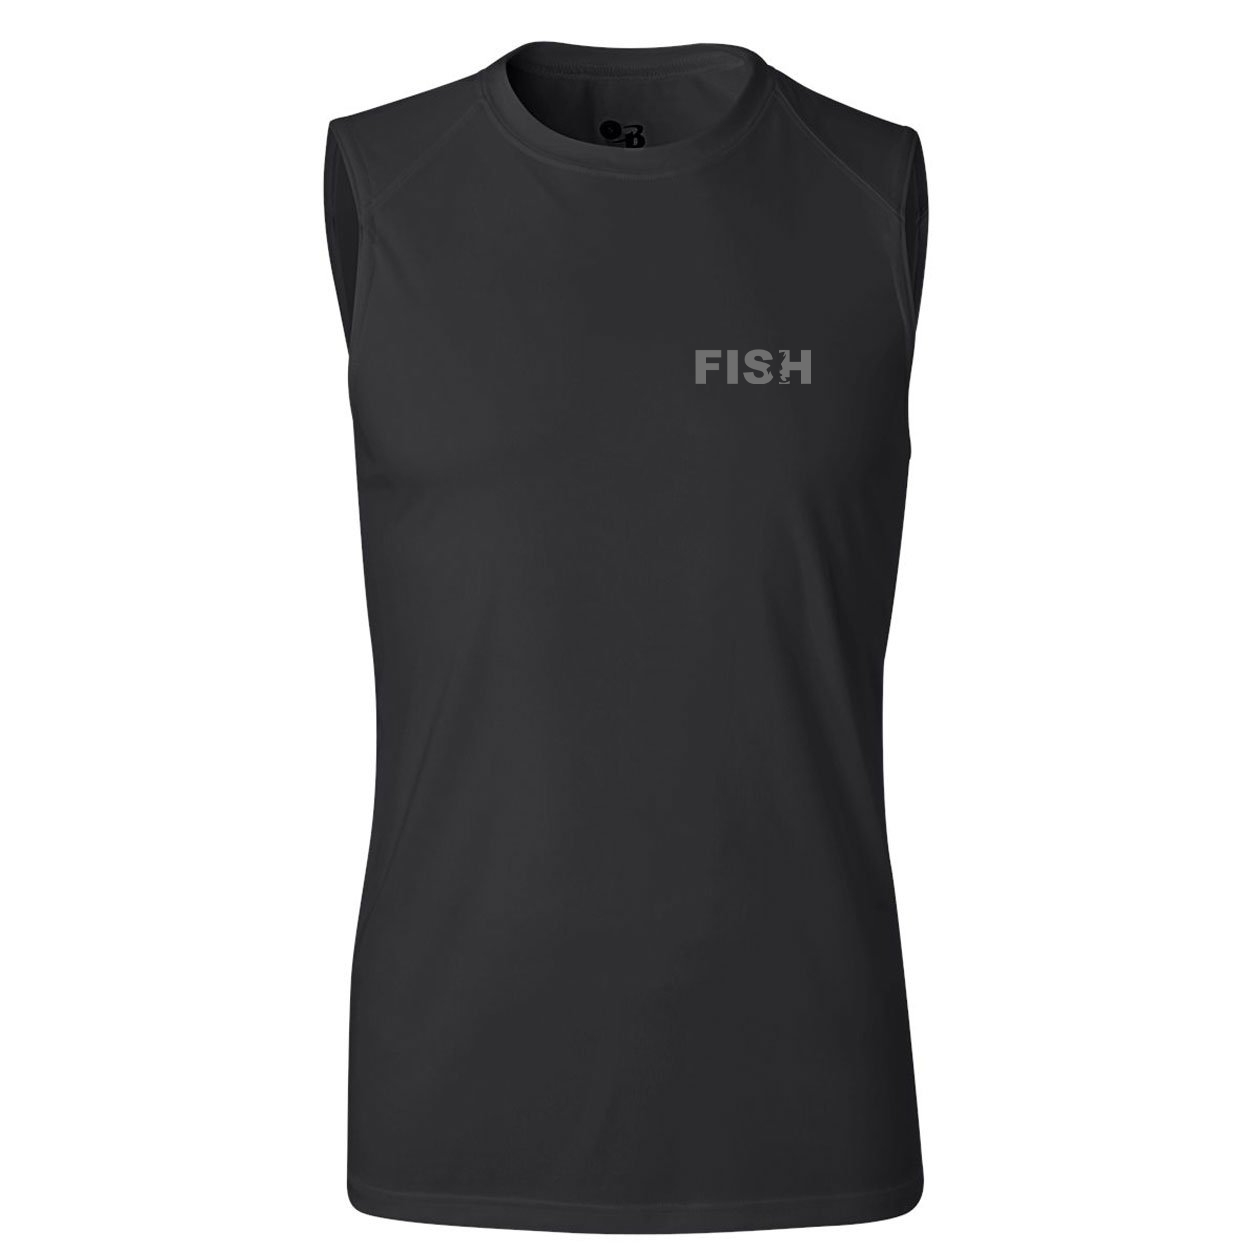 Fish Catch Logo Night Out Unisex Performance Sleeveless T-Shirt Black (Gray Logo)